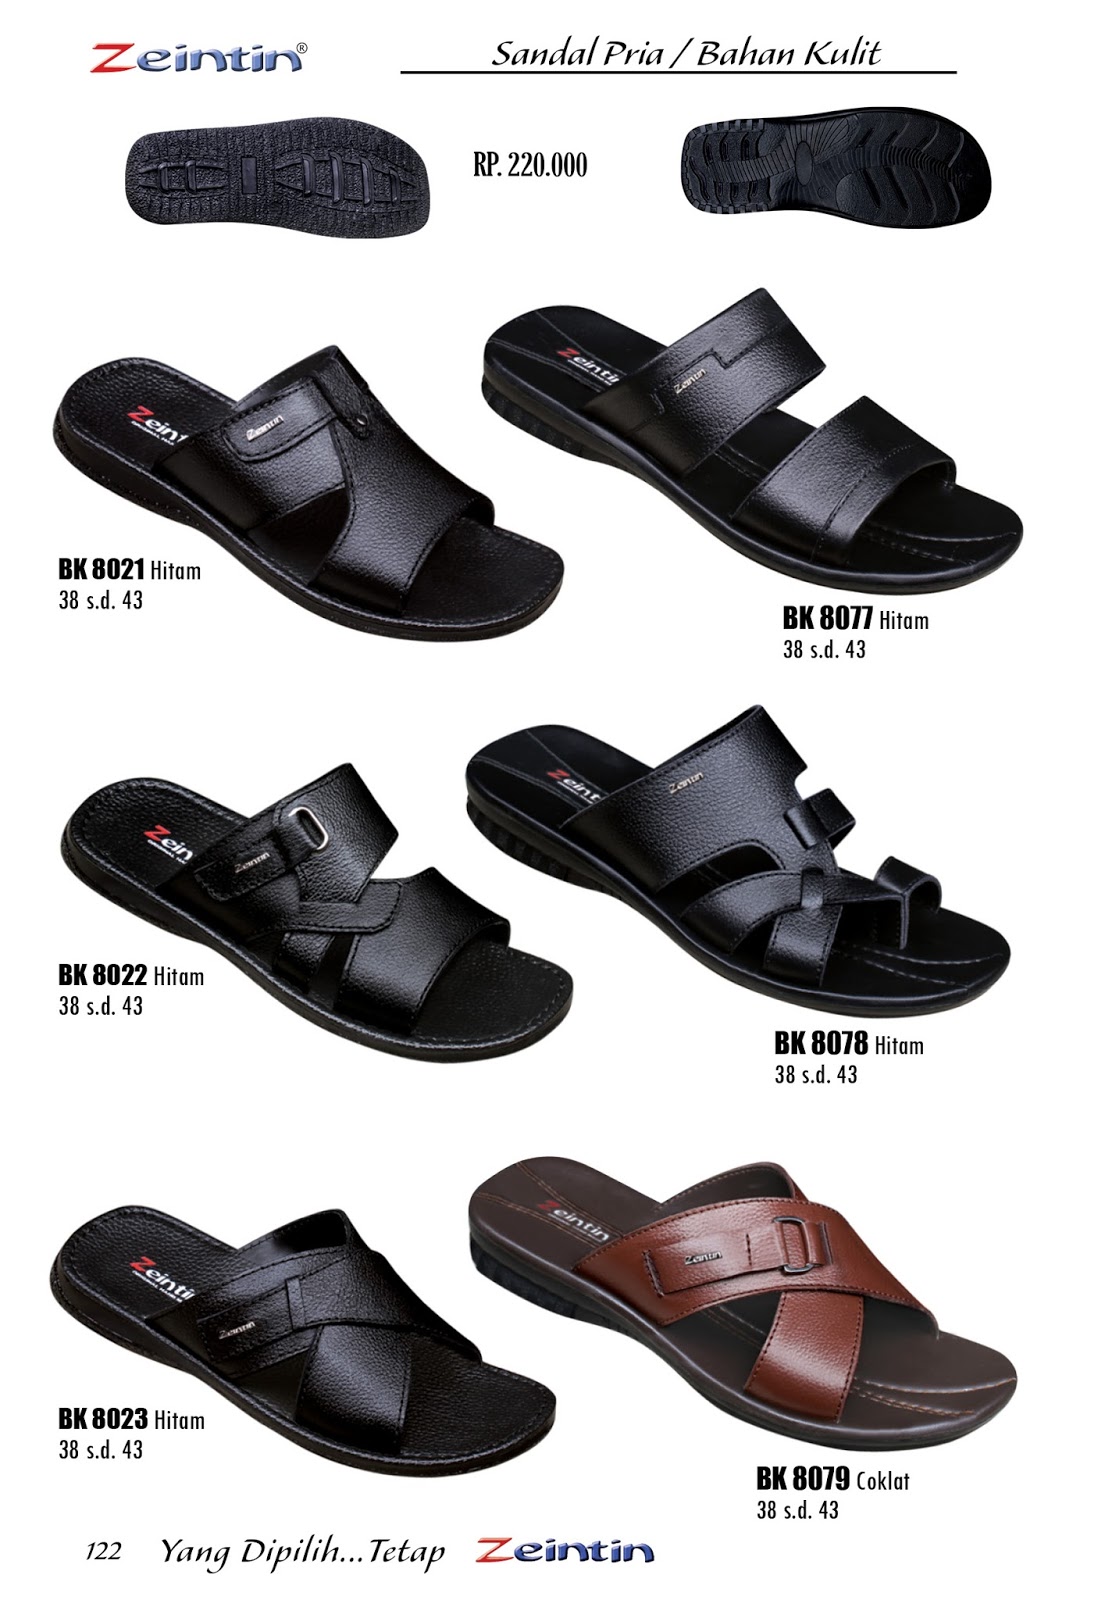  Sandal  Pria  Seri III Online Mall Sepatu dan Tas Indonesia